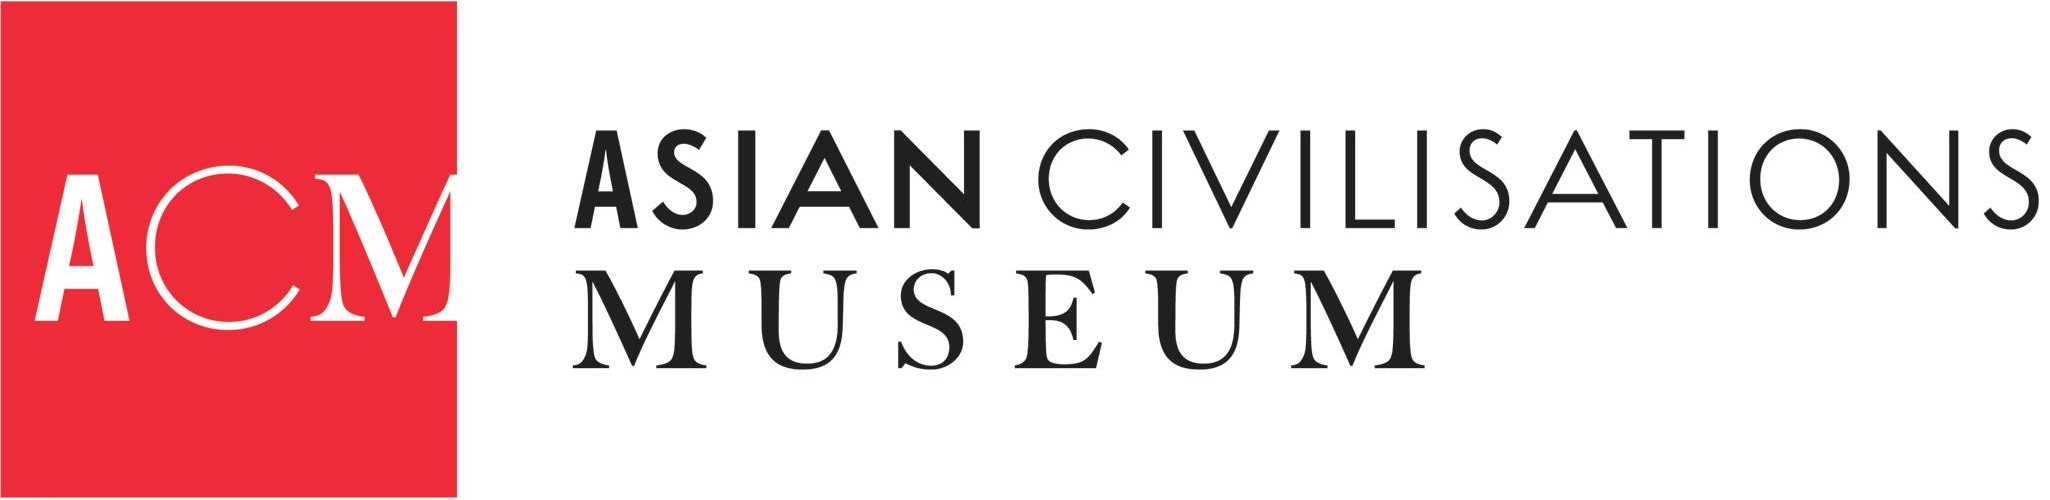 Asian Civilisation Museum.jpg